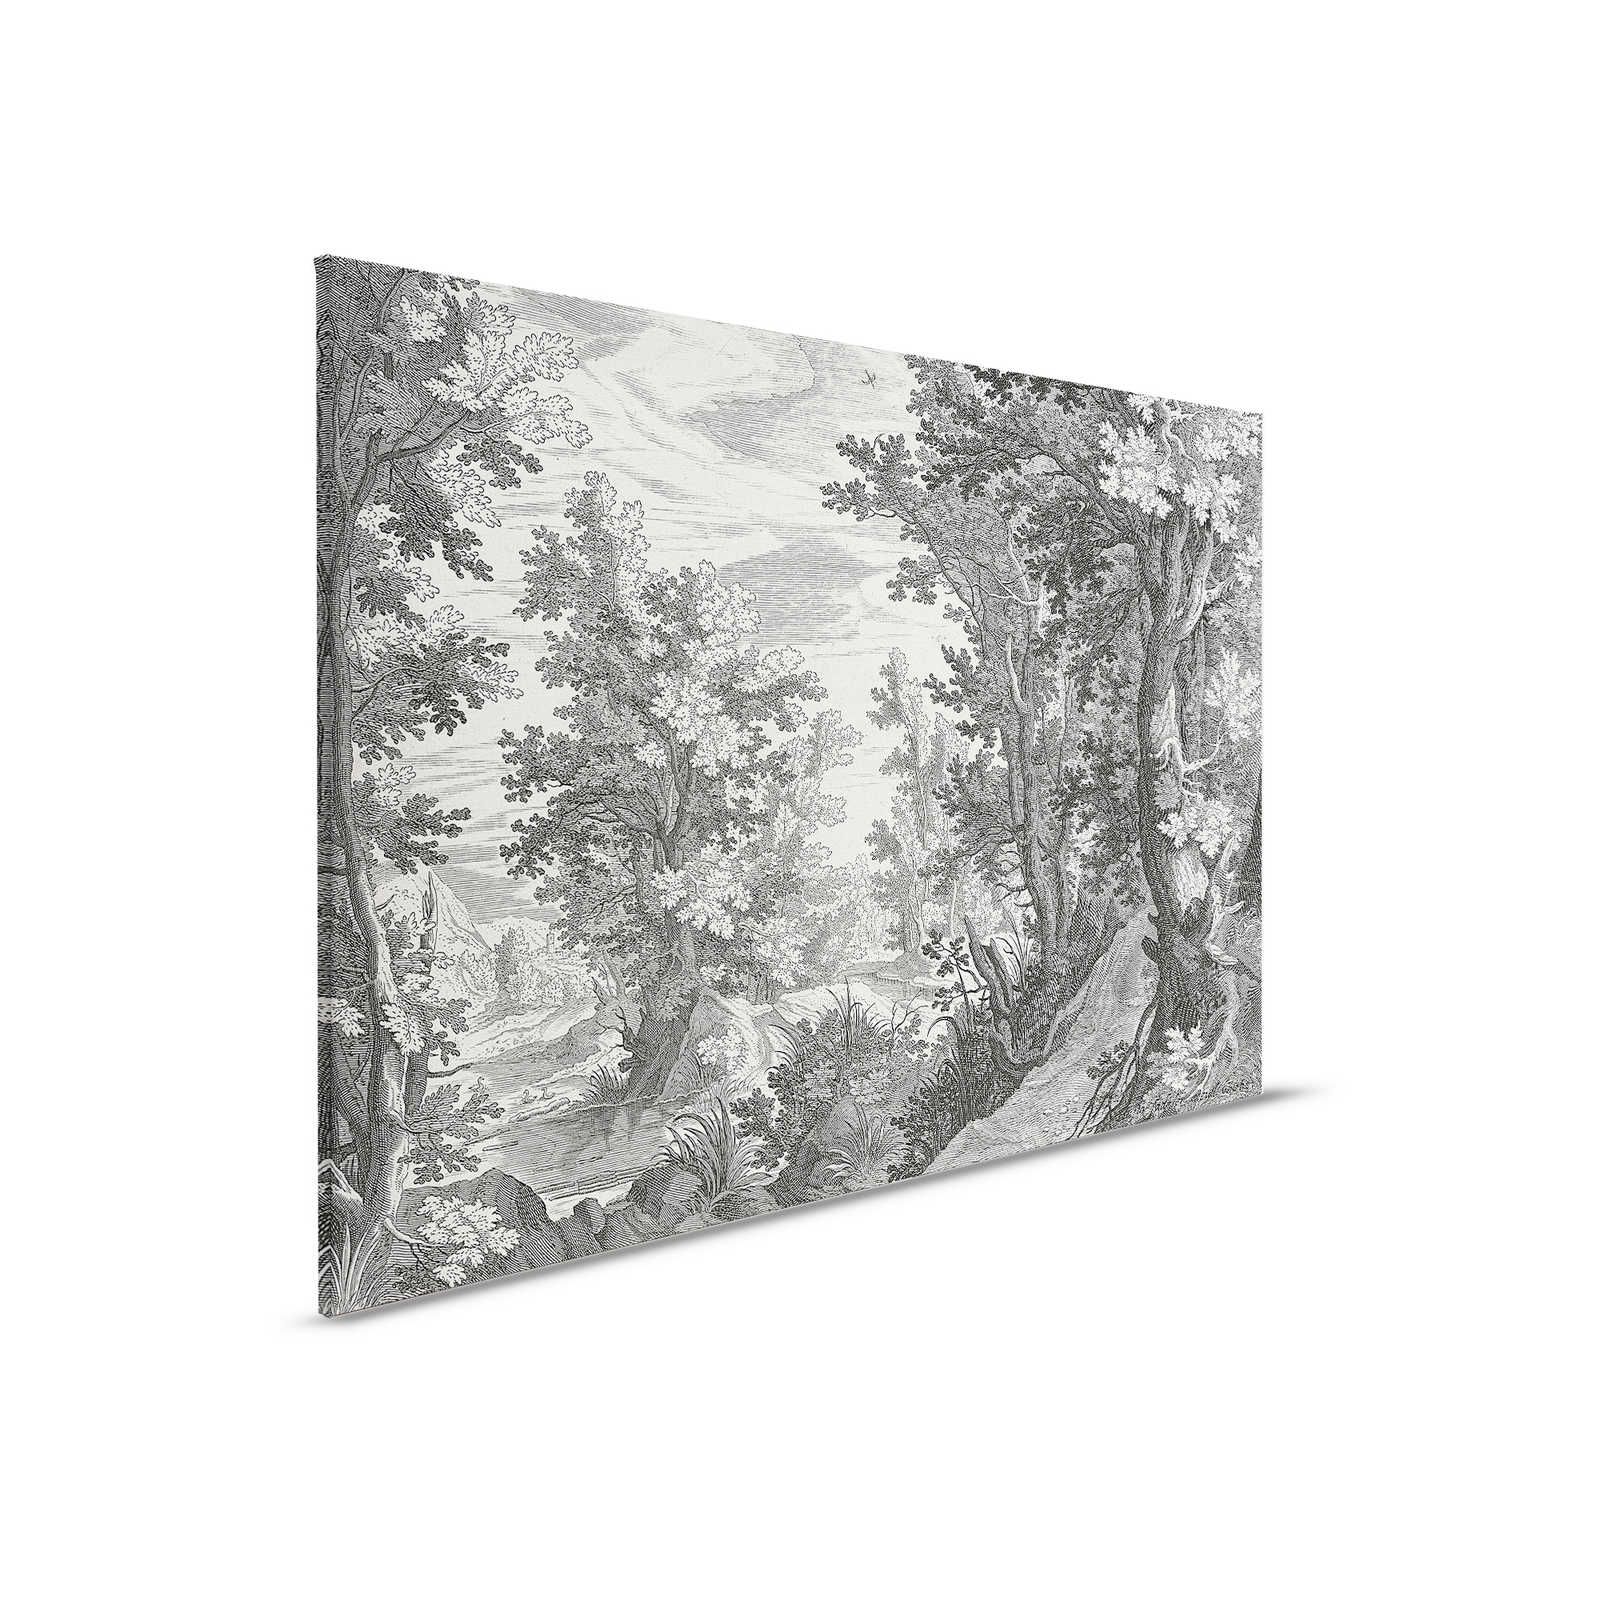         Fancy Forest 3 - Canvas painting Landscape Copperplate Black & White - 0.90 m x 0.60 m
    